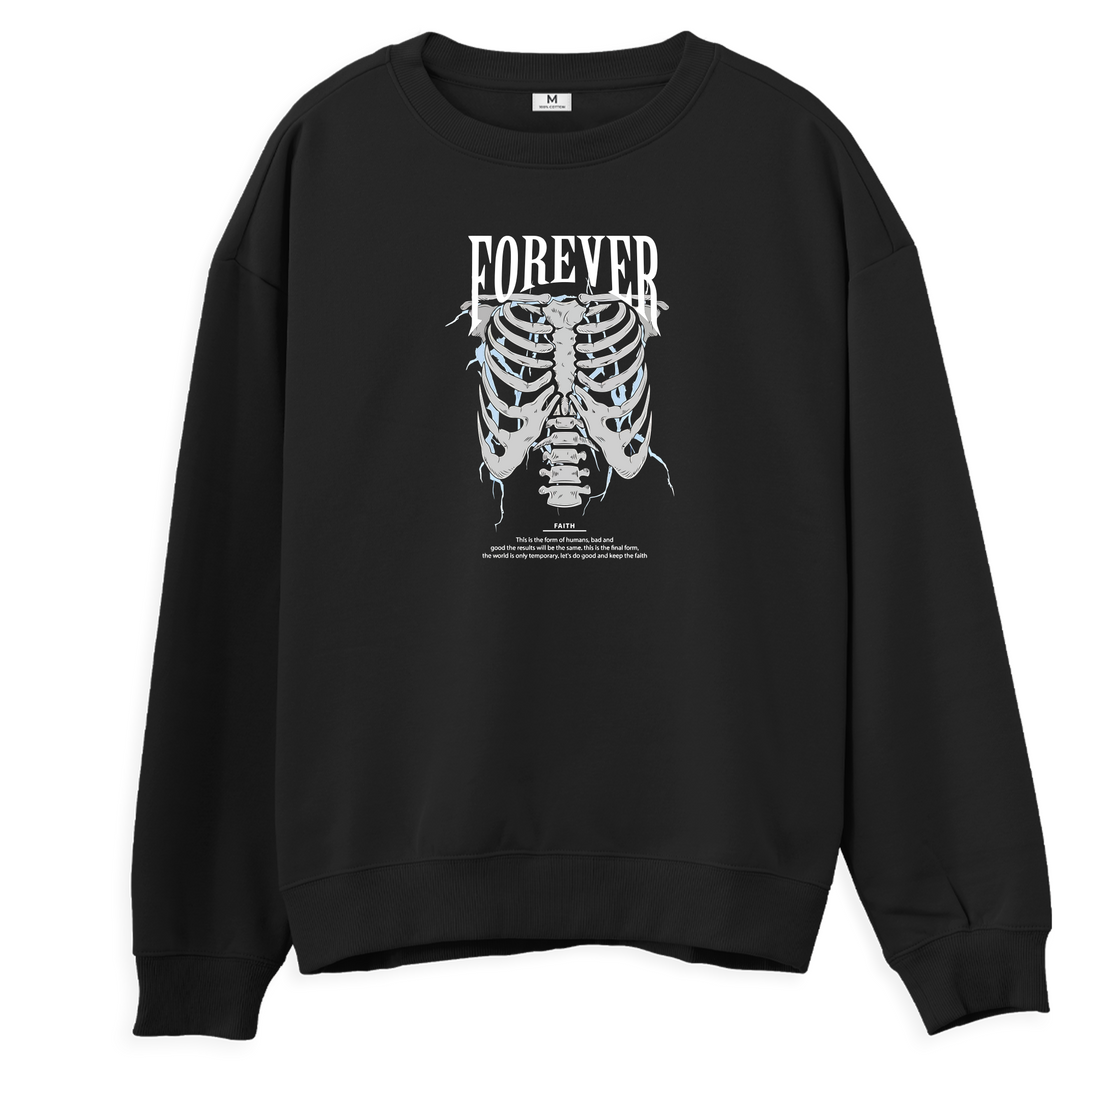 Forever - Sweatshirt